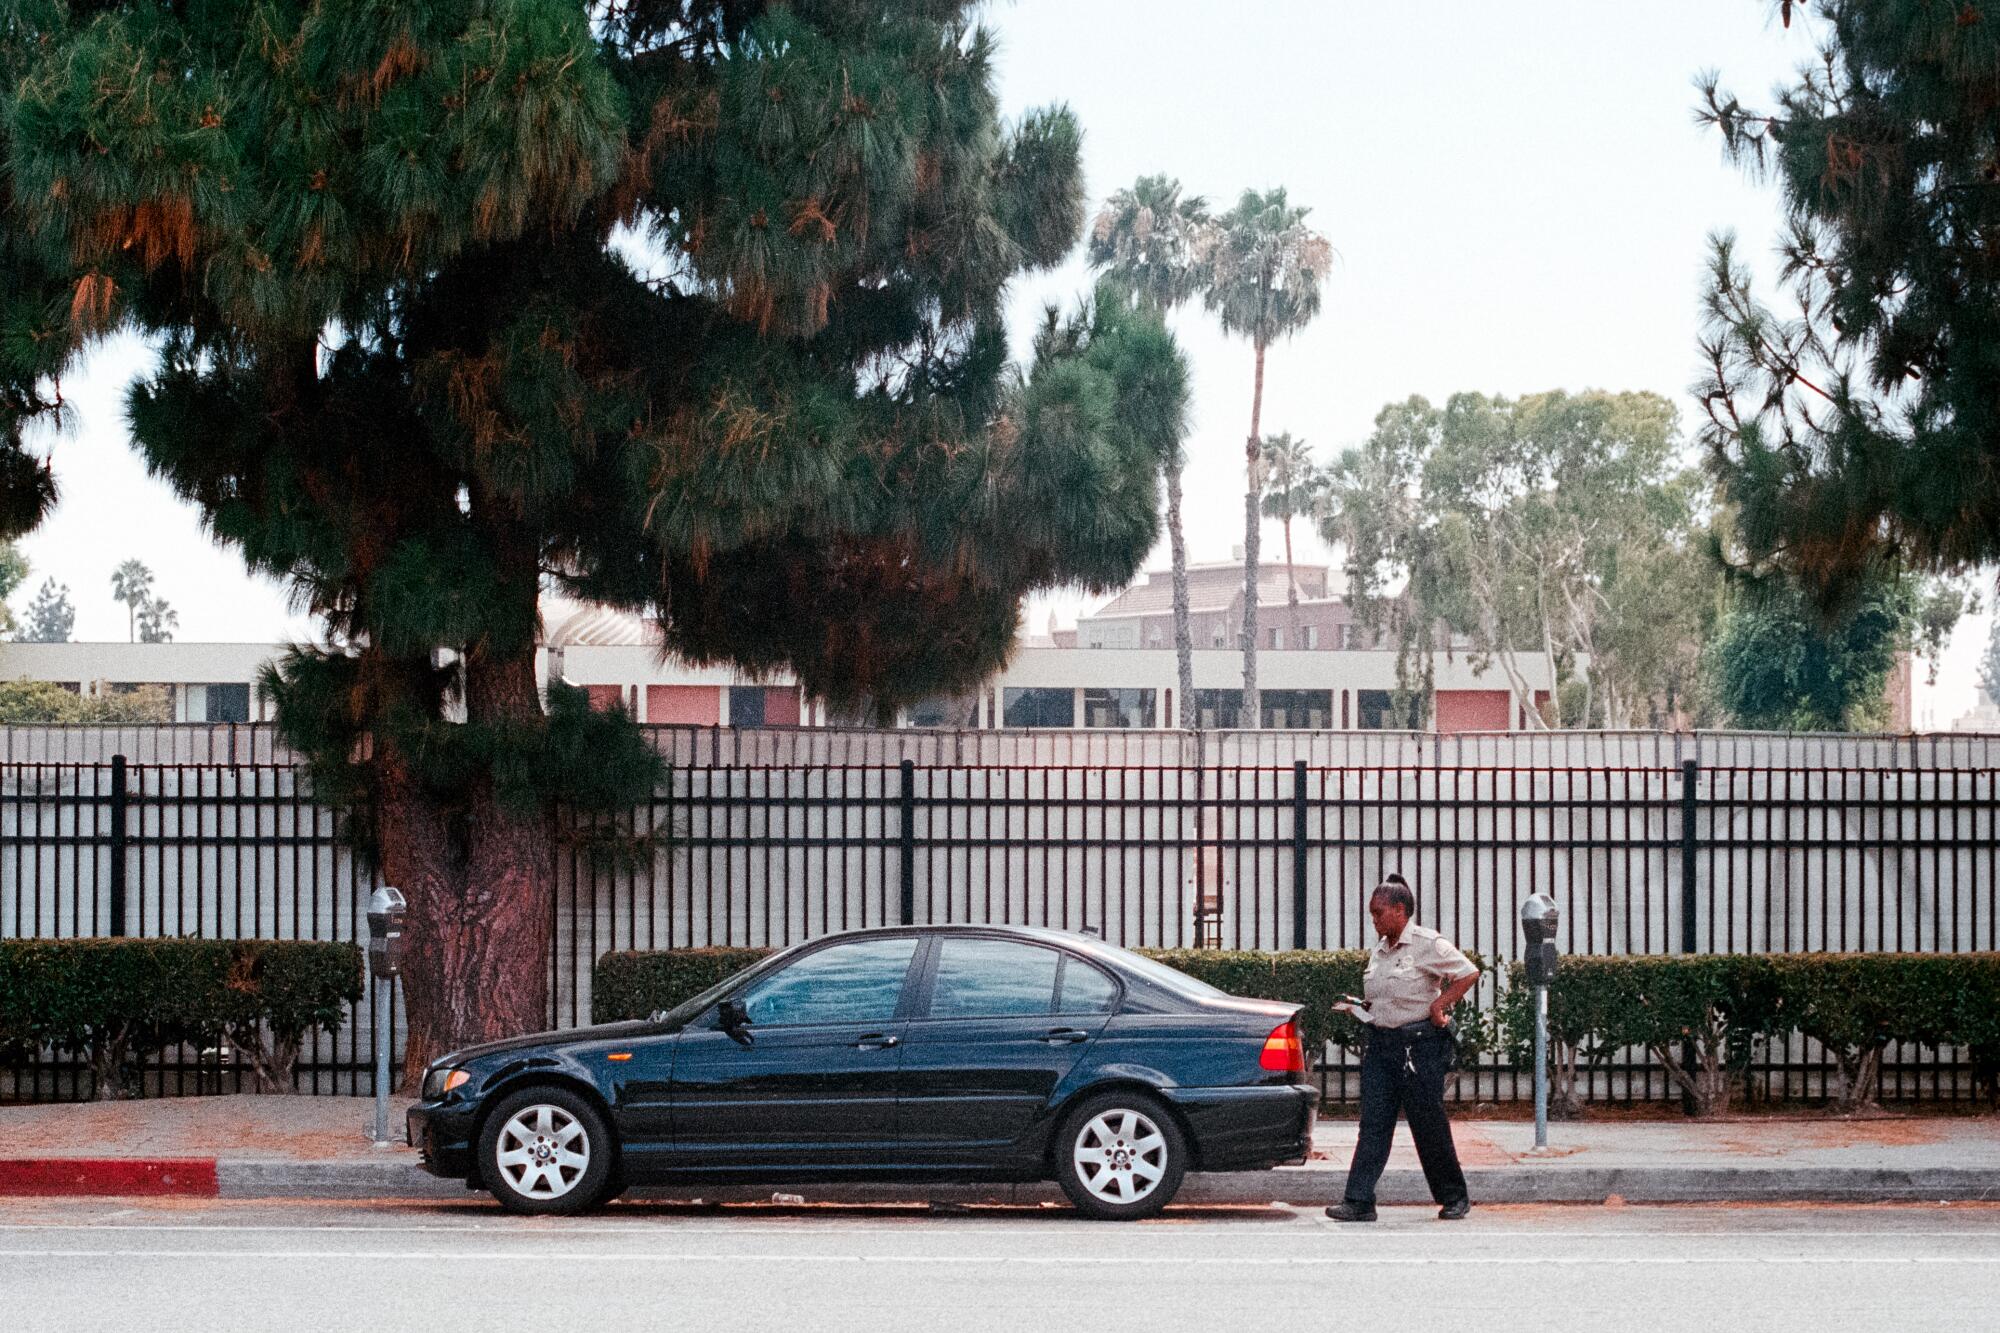 An officer walks by a parked car.